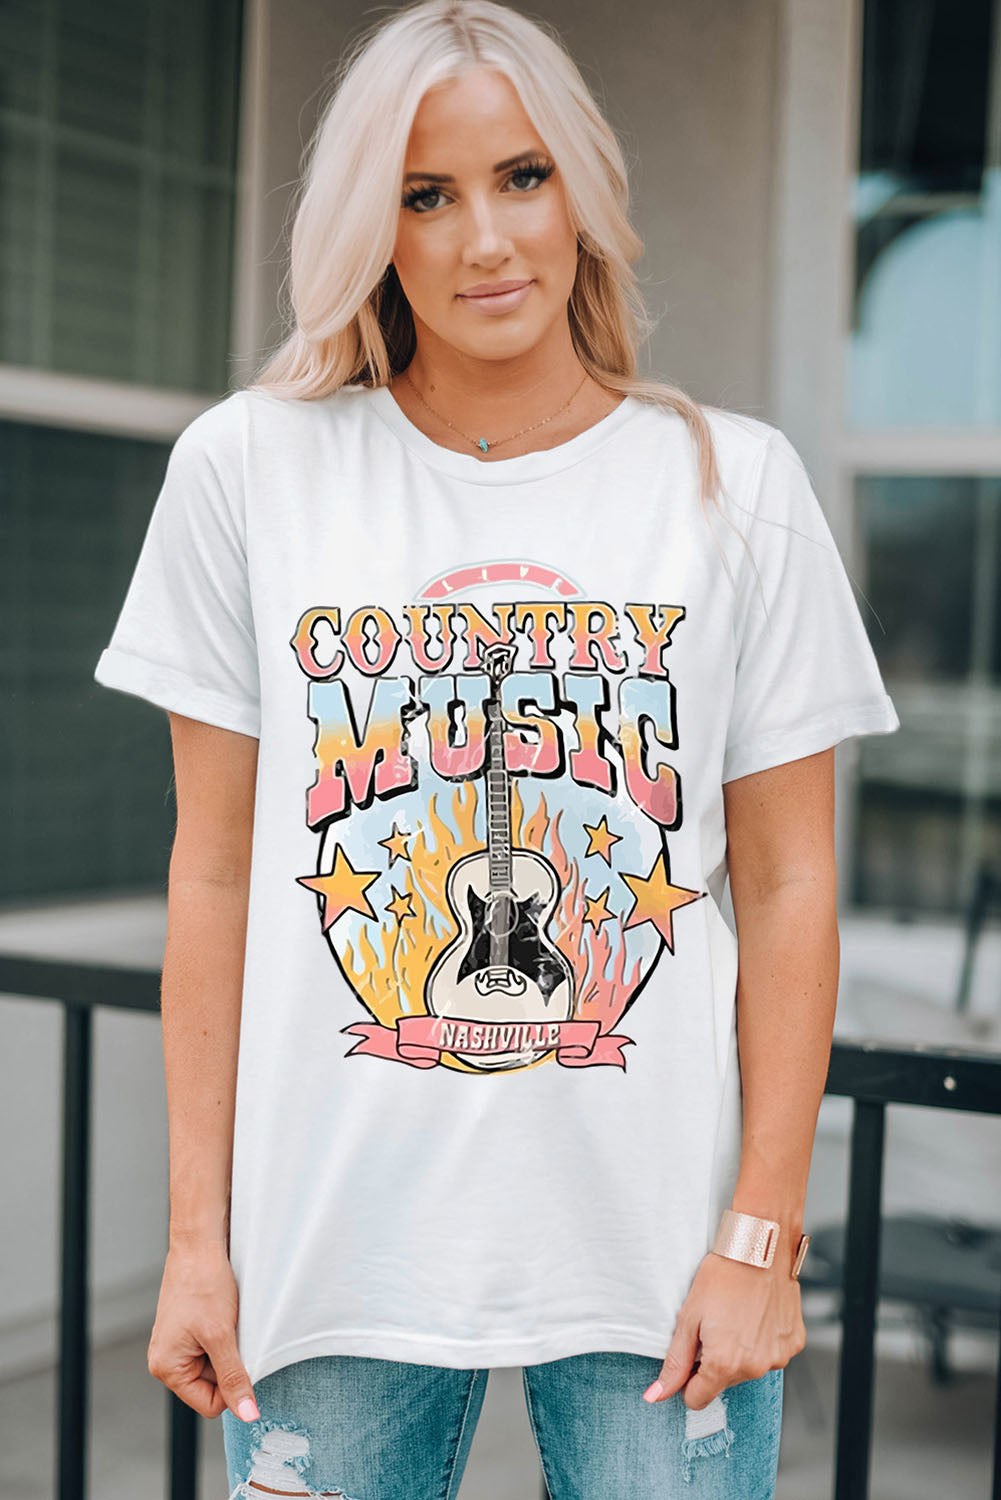 COUNTRY MUSIC NASHVILLE Graphic Tee Shirt